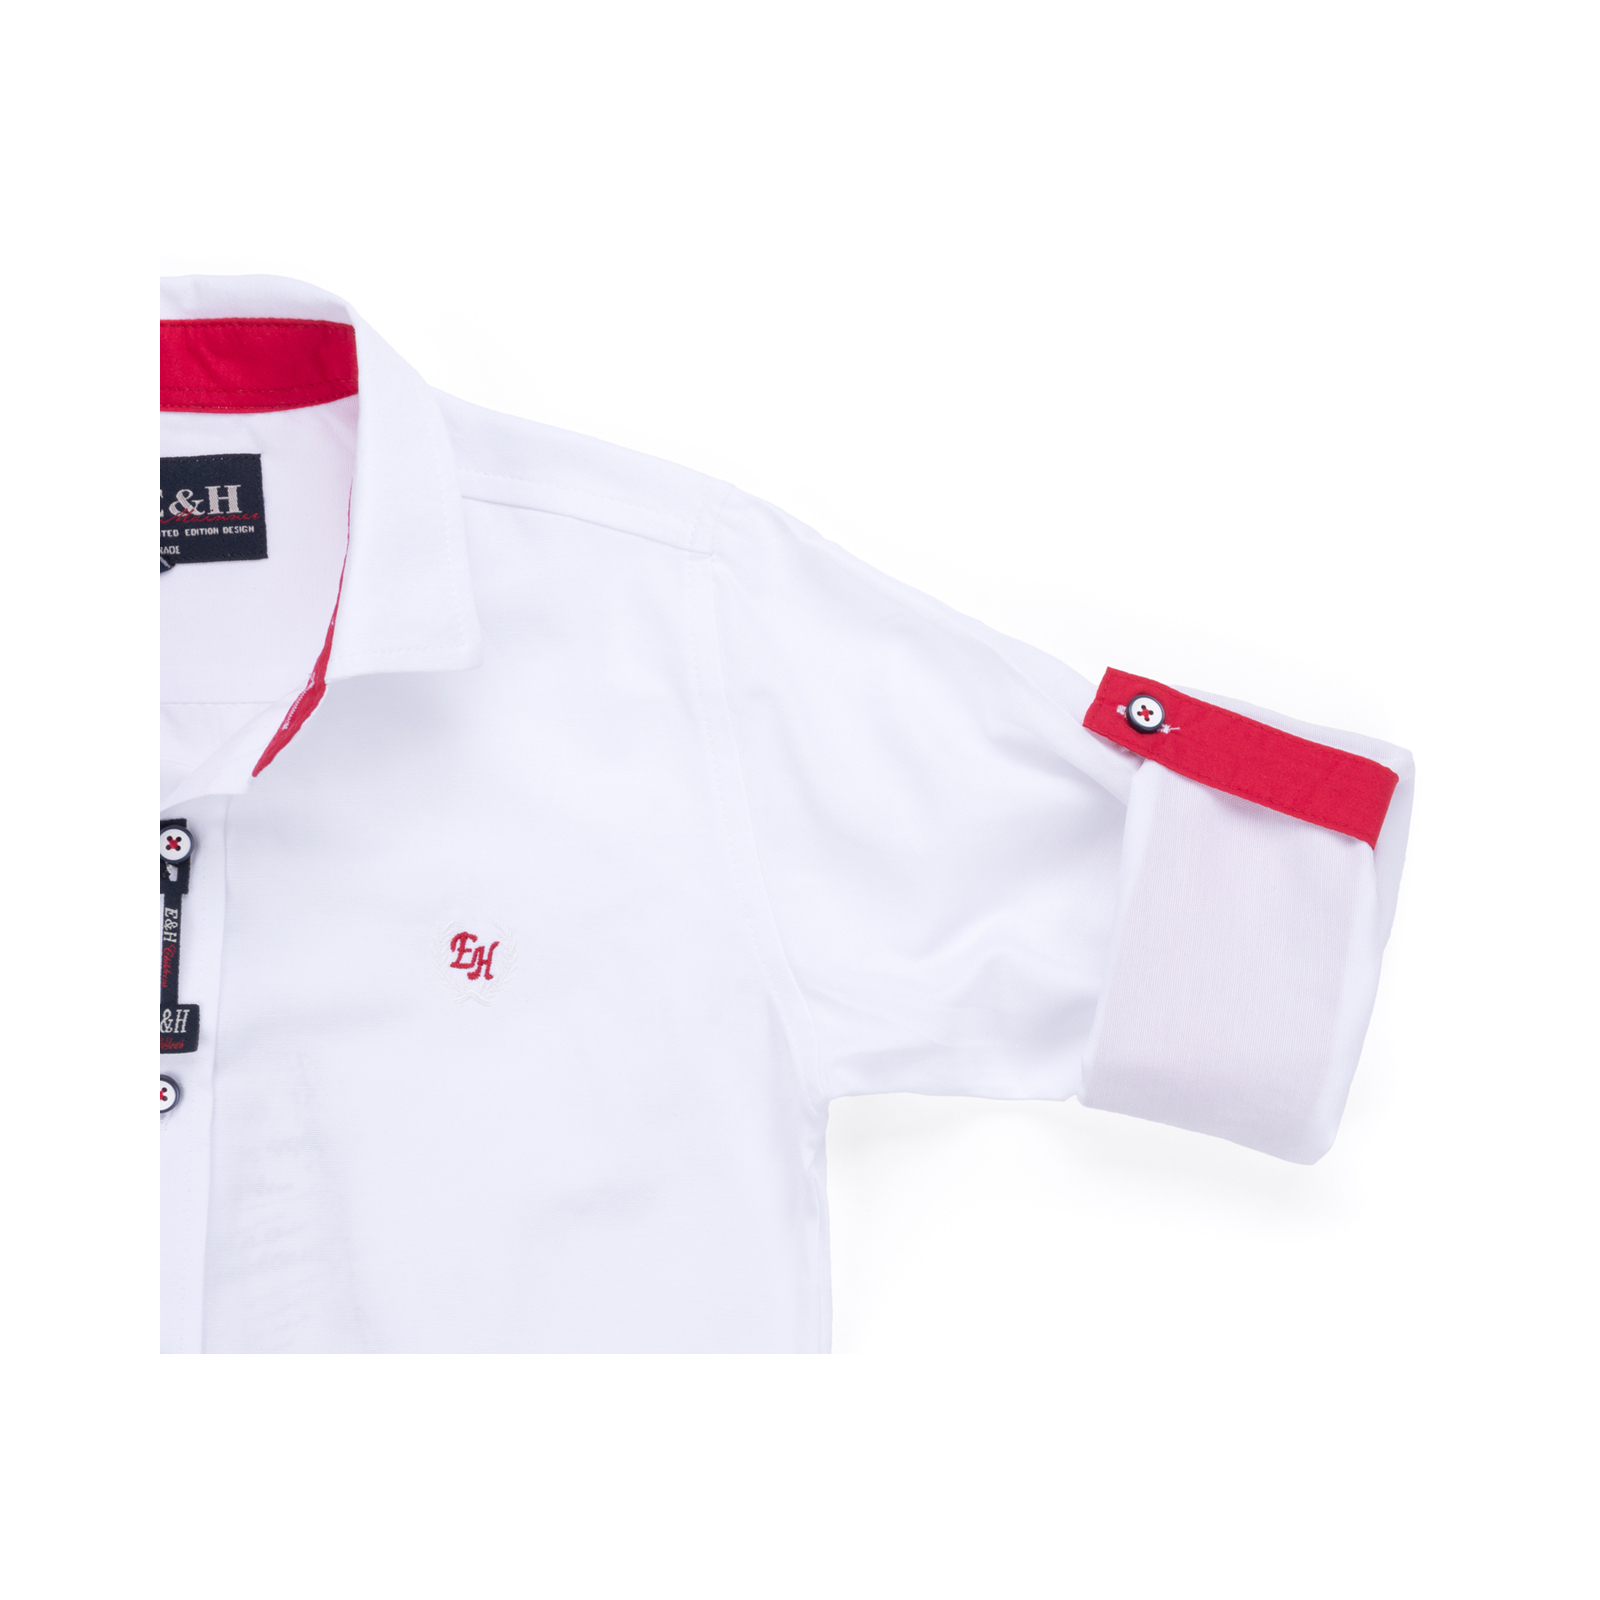 Рубашка E&H с красной бабочкой (G-233-140B-white-red) изображение 2